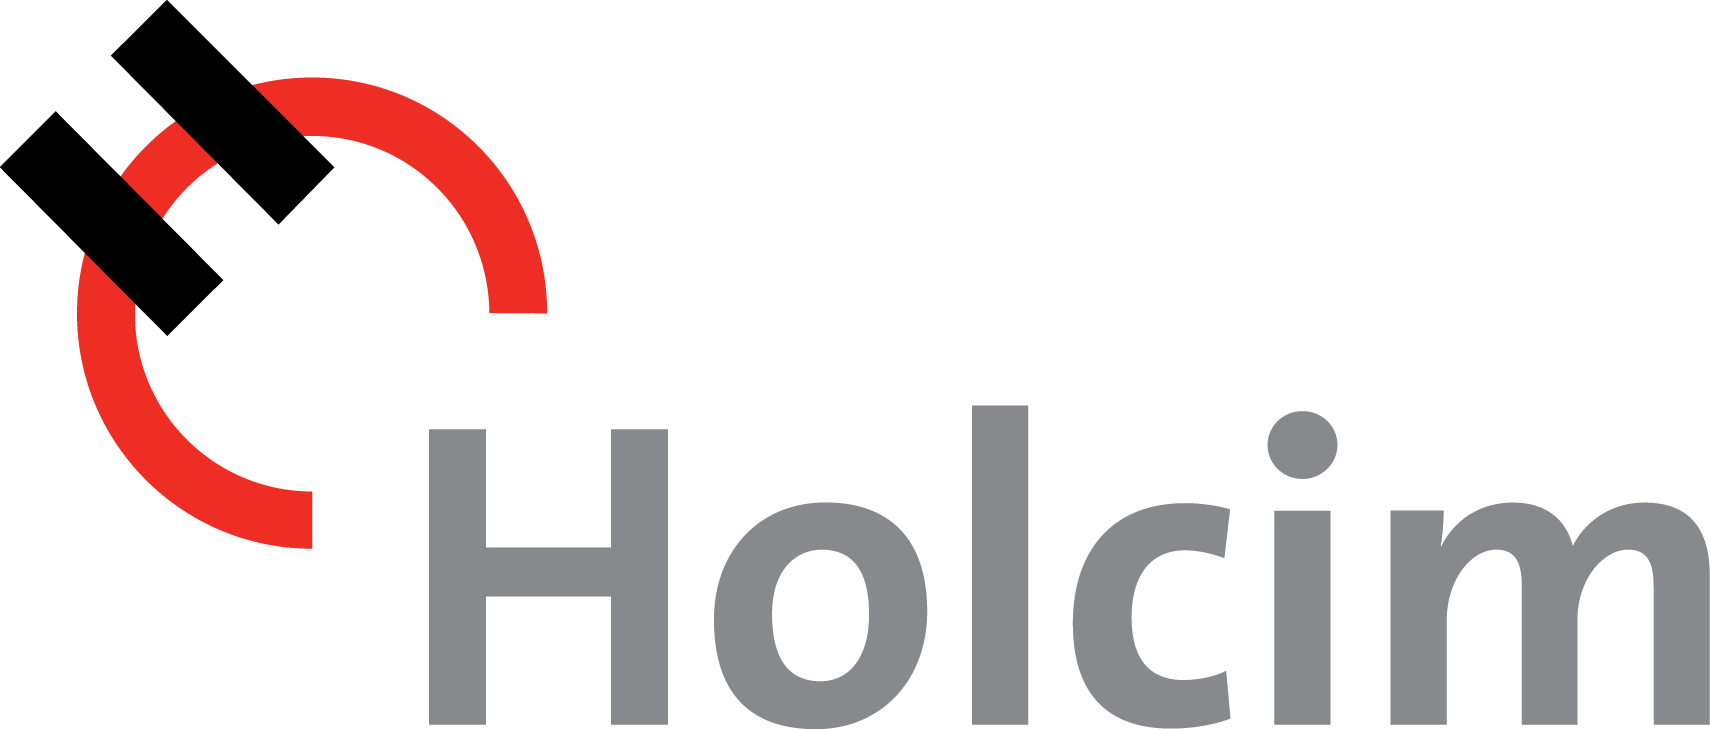 holcim_logo